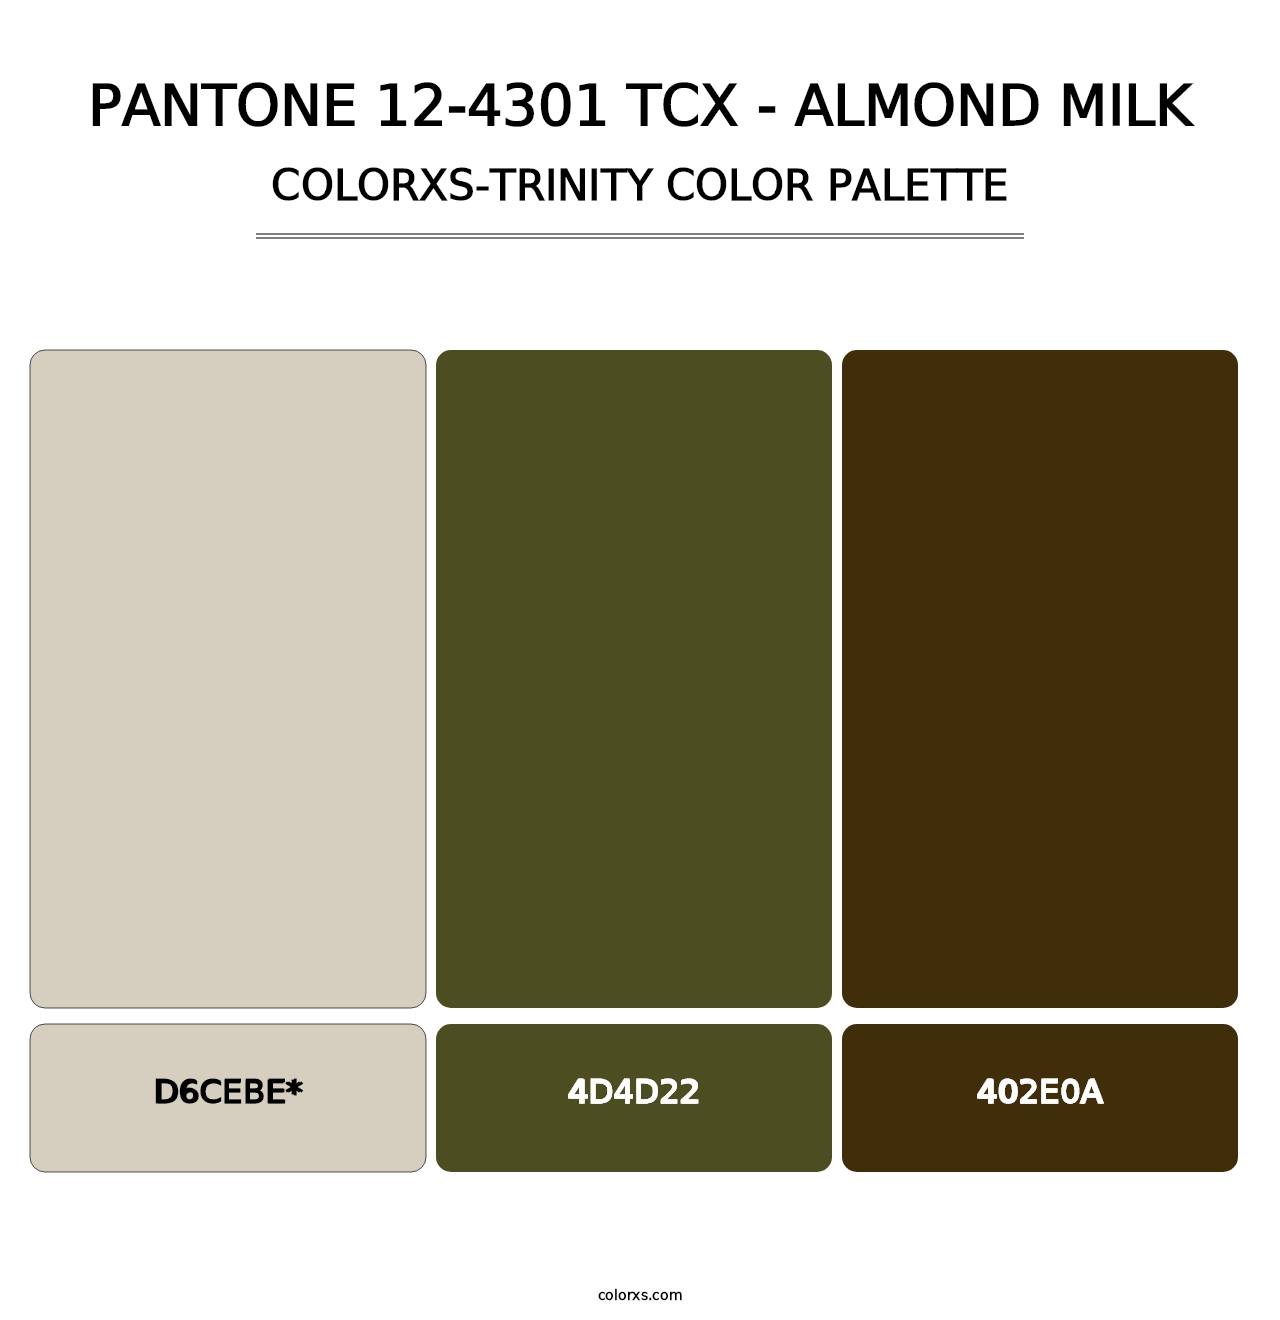 PANTONE 12-4301 TCX - Almond Milk - Colorxs Trinity Palette